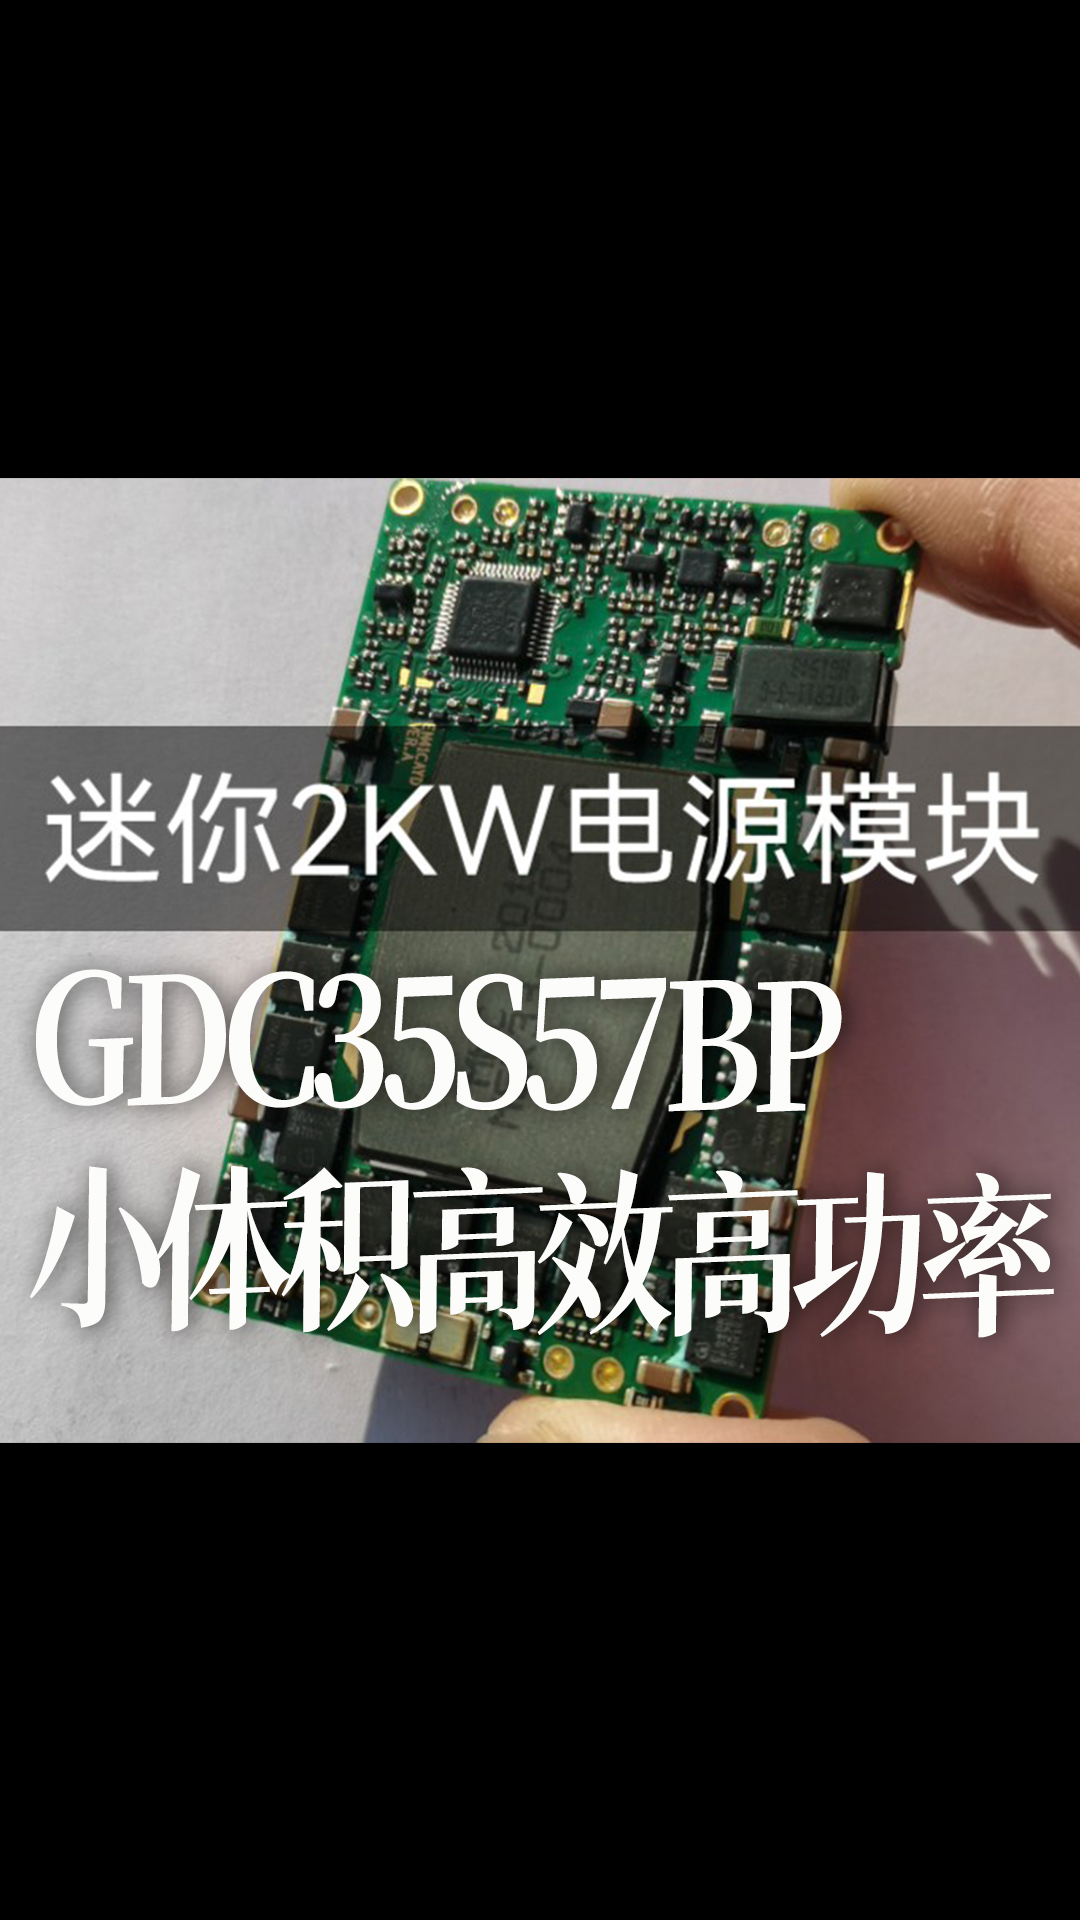 GDC35S57BP 小体积高效高功率密度电源模块 输出功率可达2KW